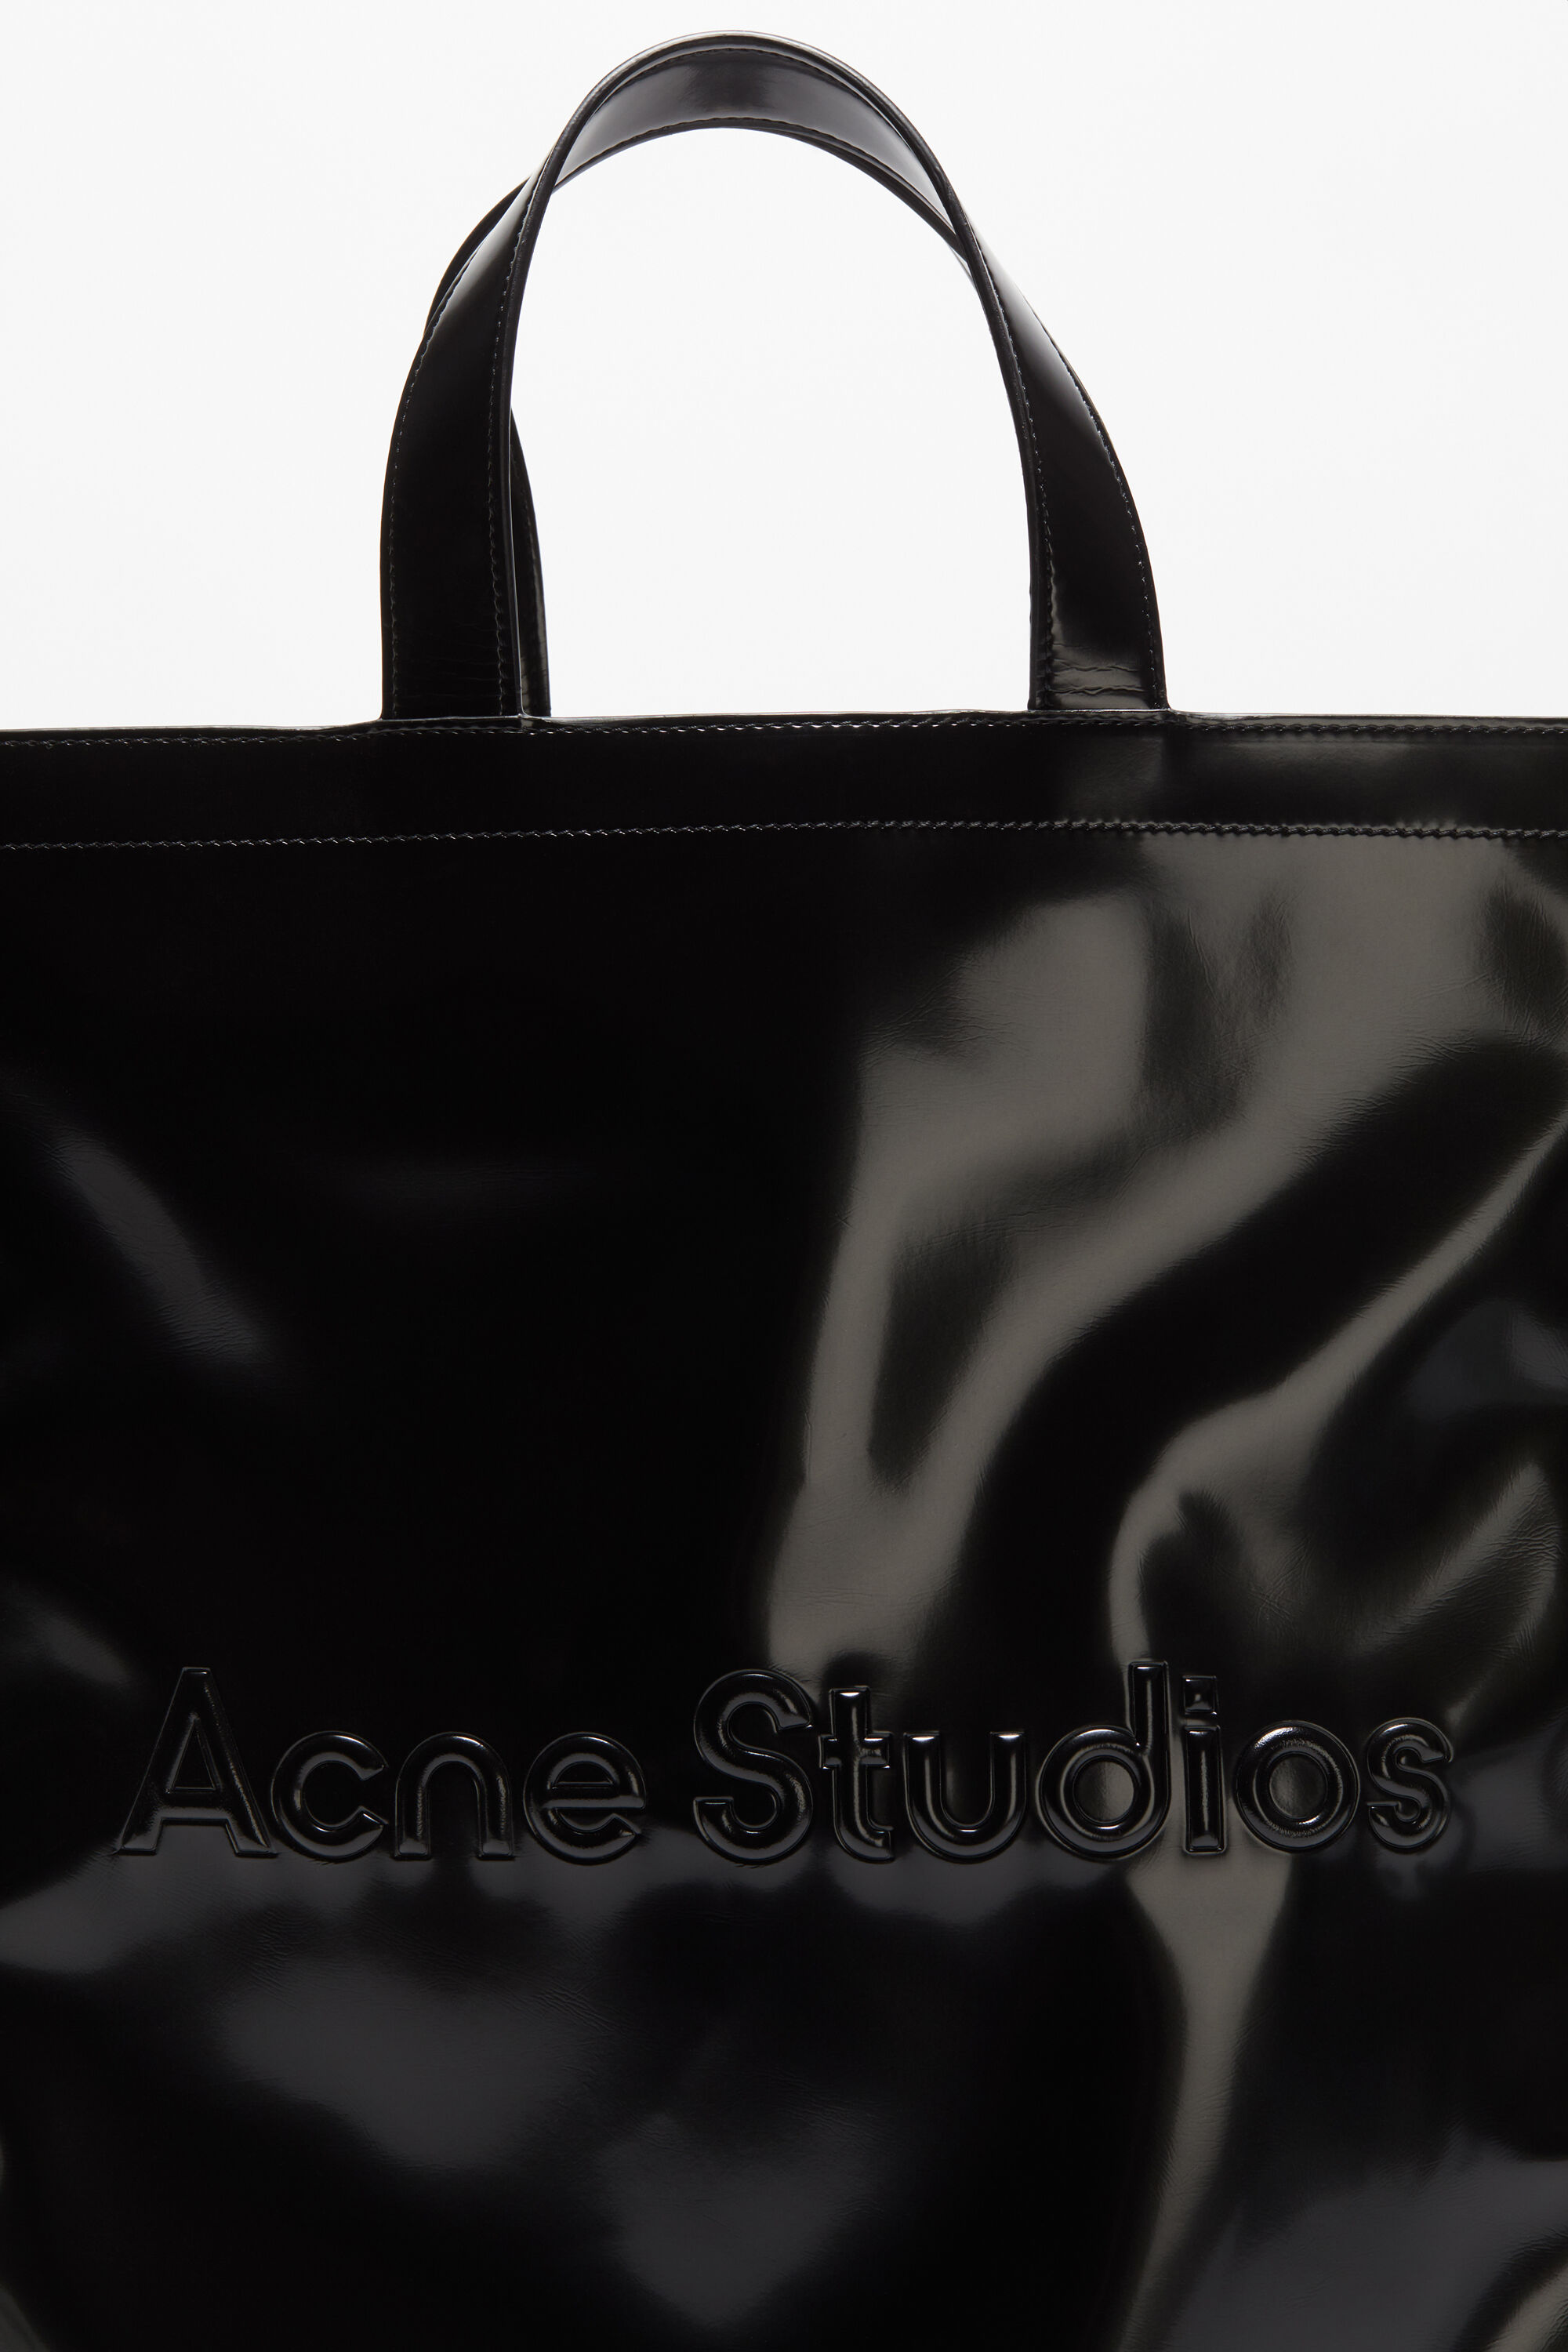 acne studios アクネストゥディオズ トートバッグ ブラック